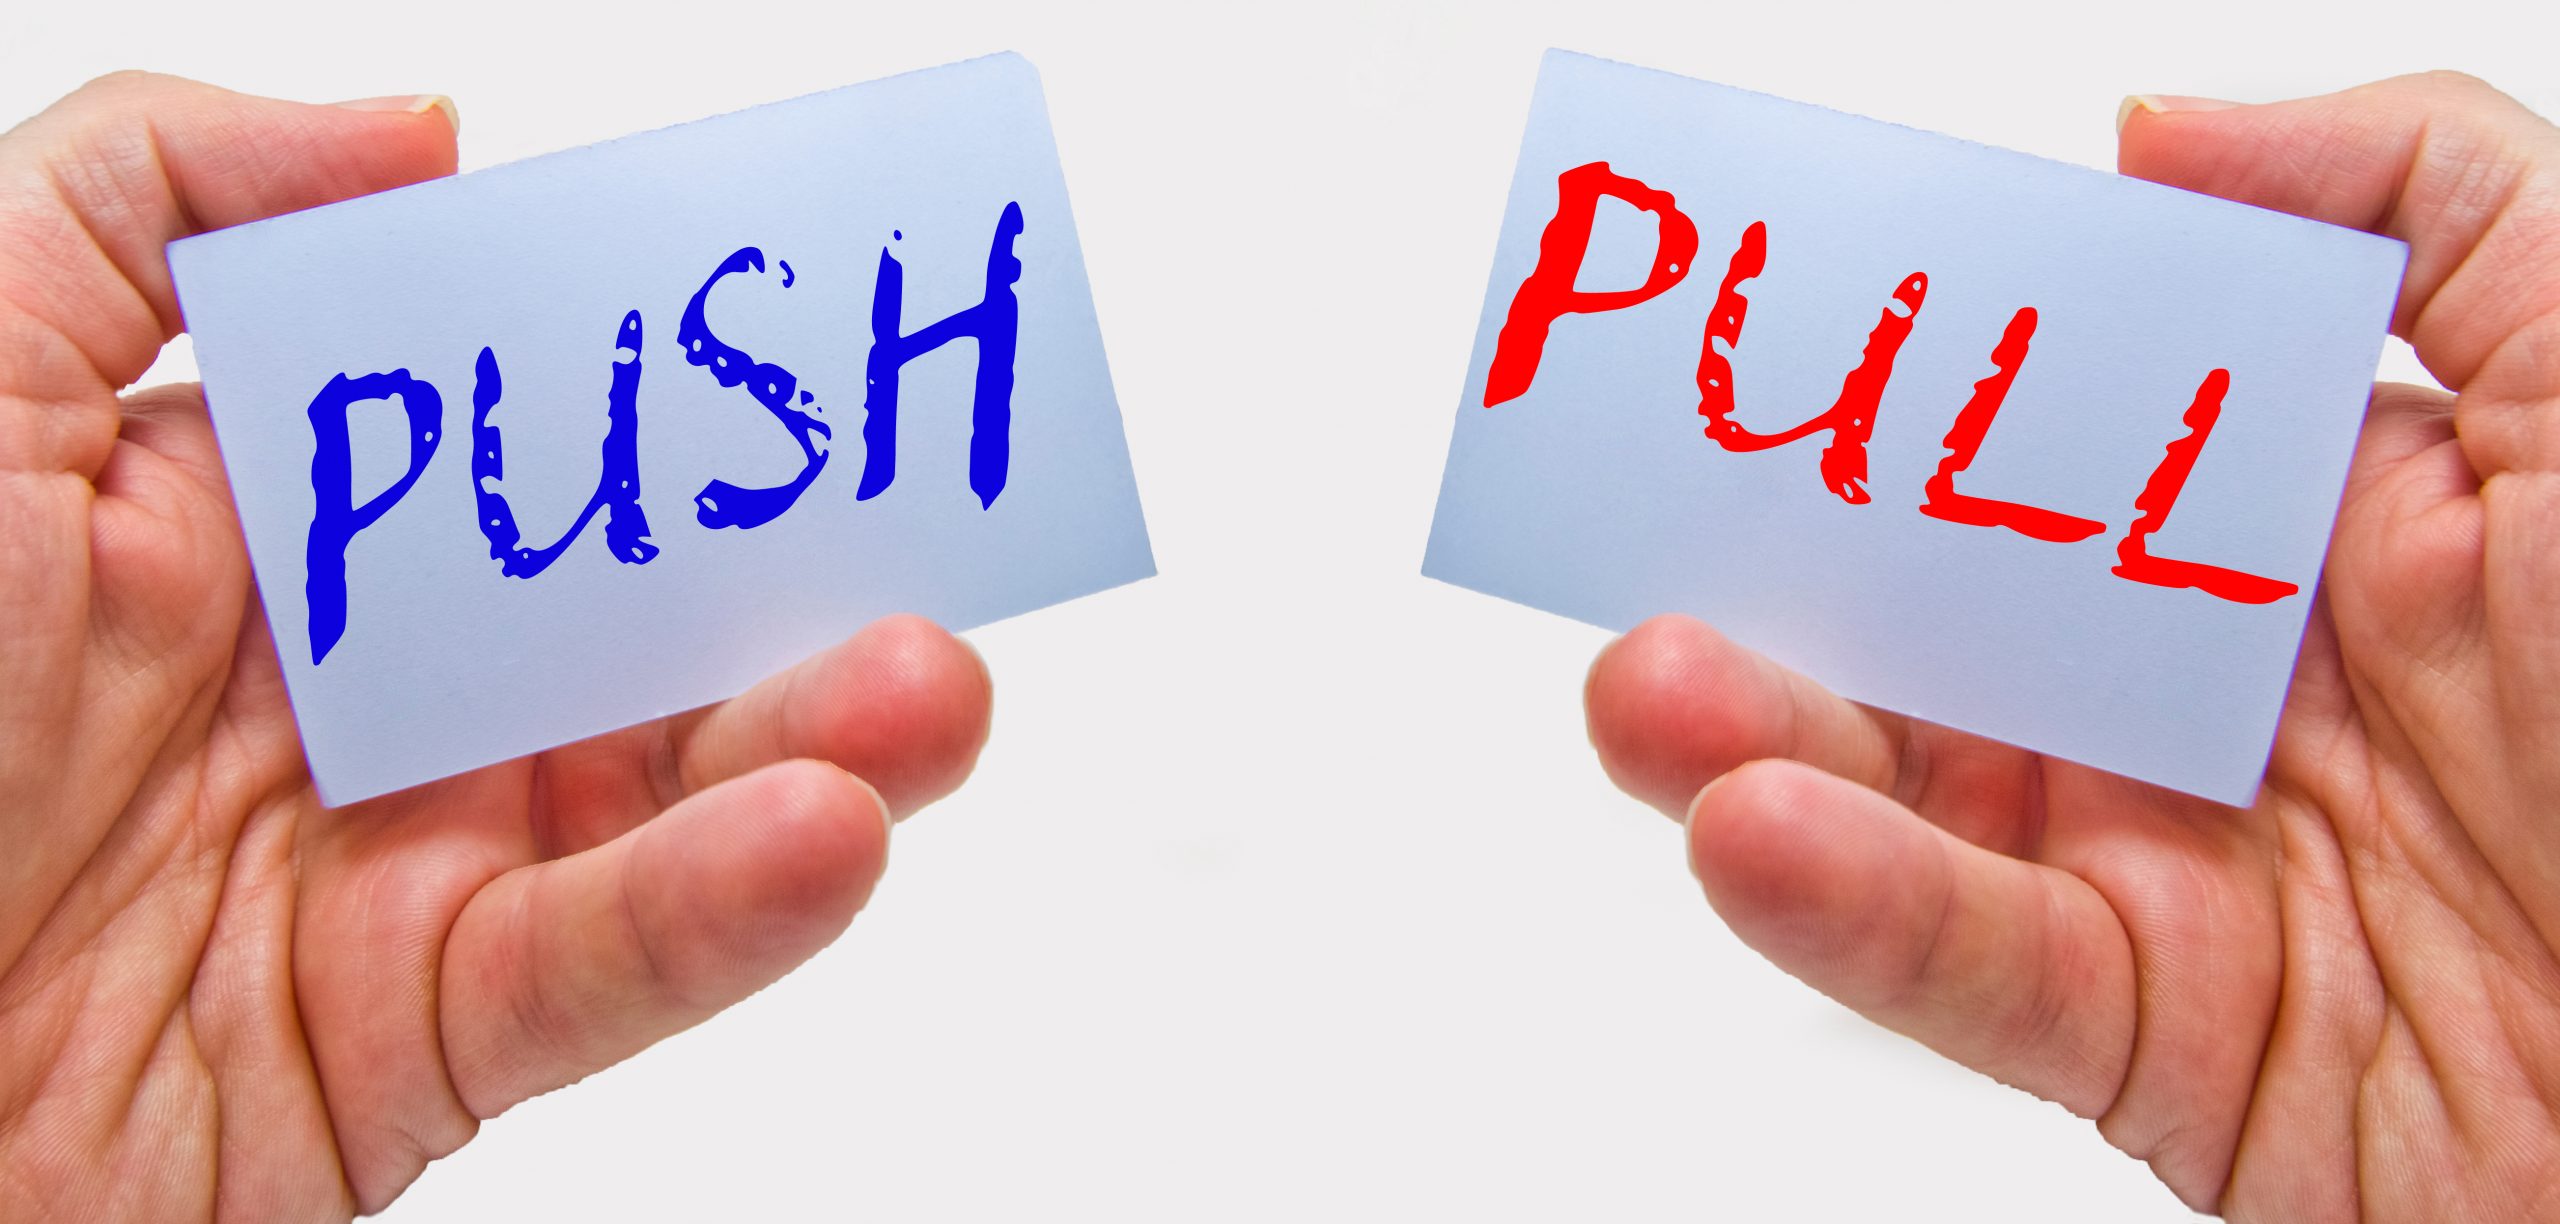 marketing pull and push - Street Diffusion